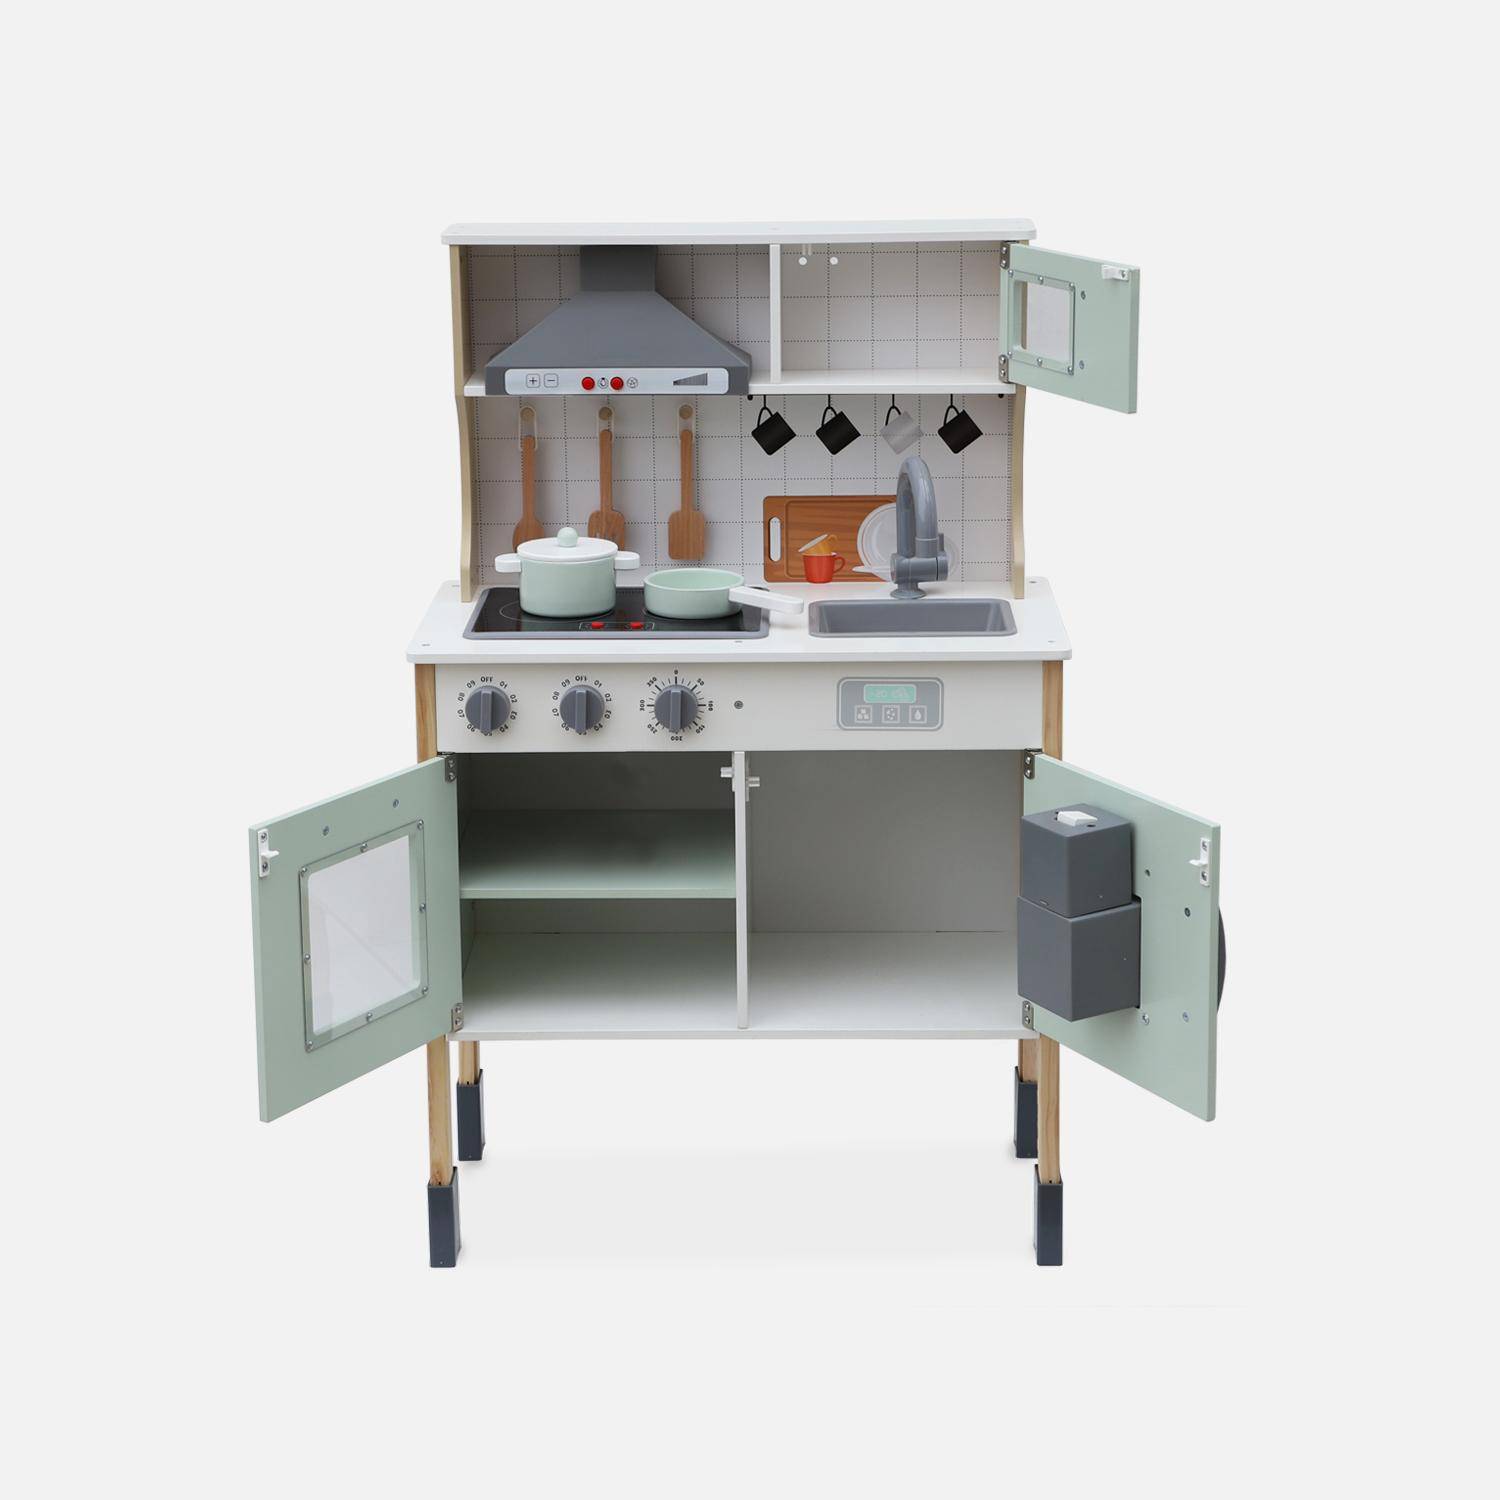 Panel de cocina infantil, accesorios incluidos, campana, placa de cocción, microondas electrónico,sweeek,Photo9